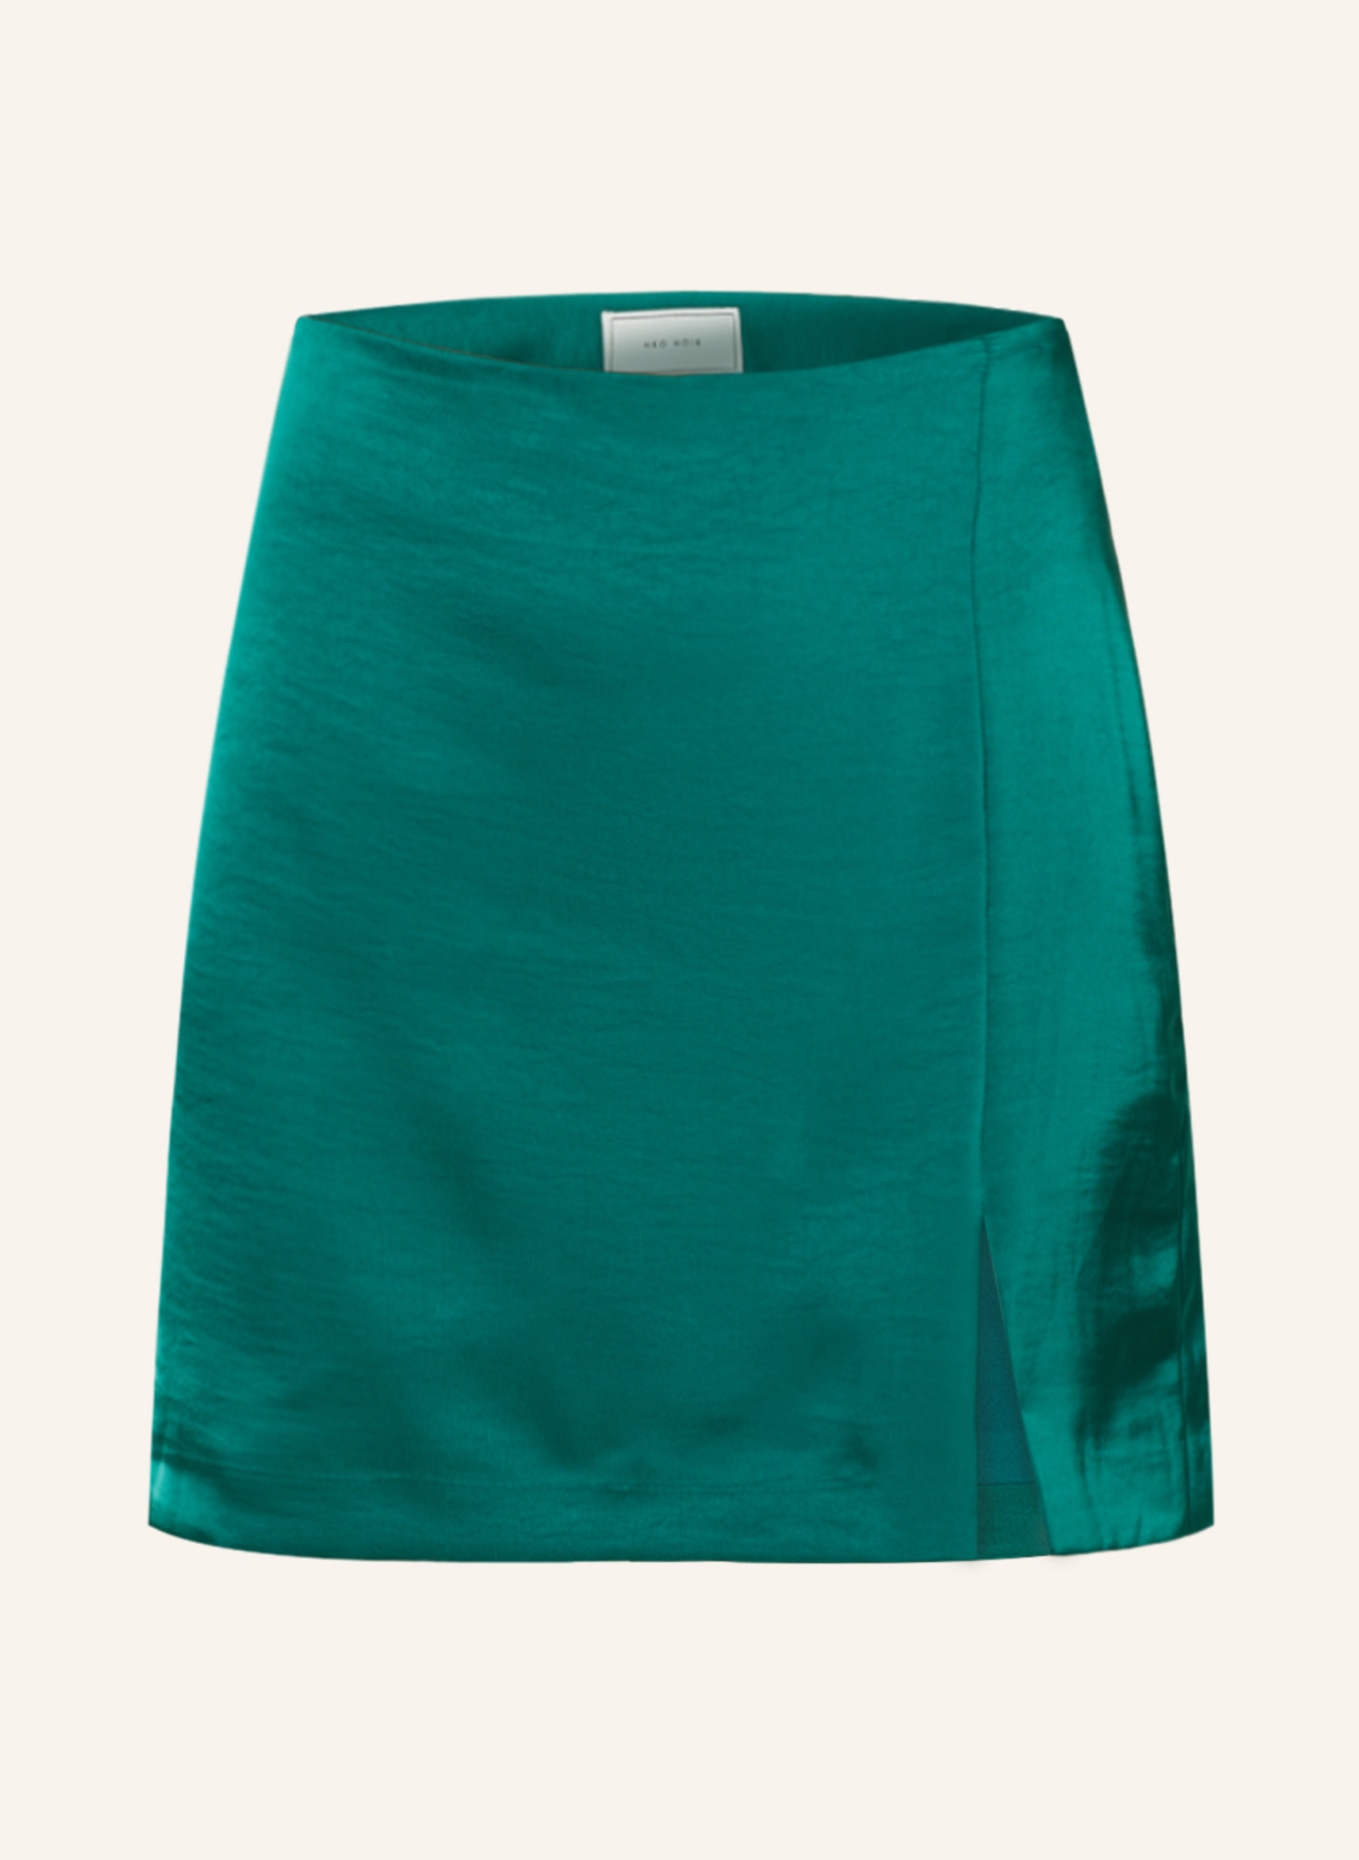 Атласная юбка NEO NOIR SIENNA, зеленый